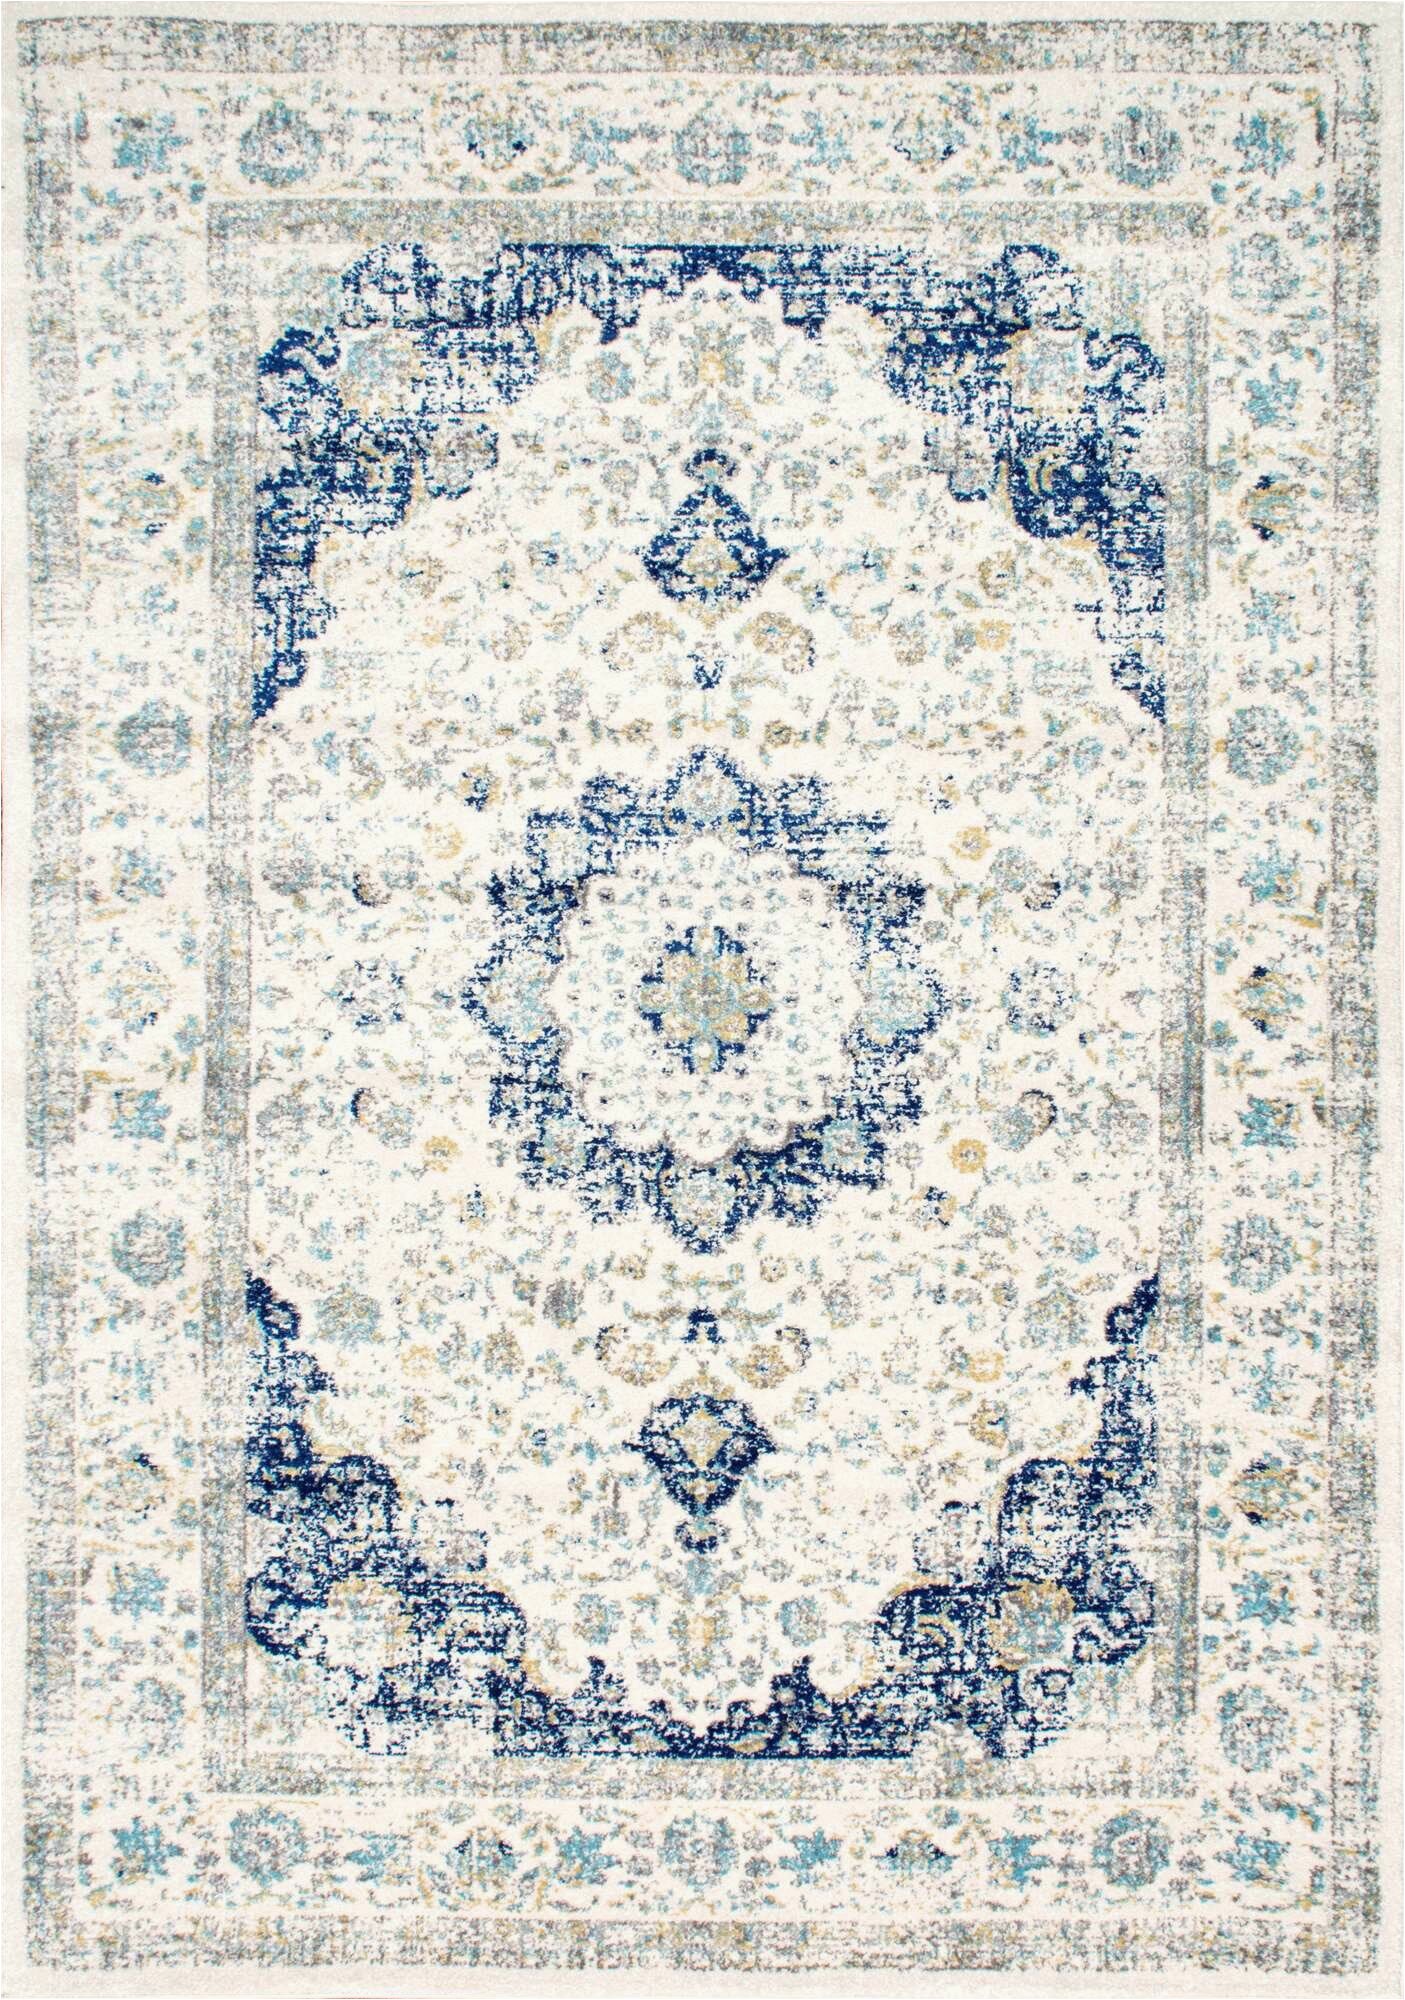 hosking persian inspired bluecream area rug lfmf3971 piid=0